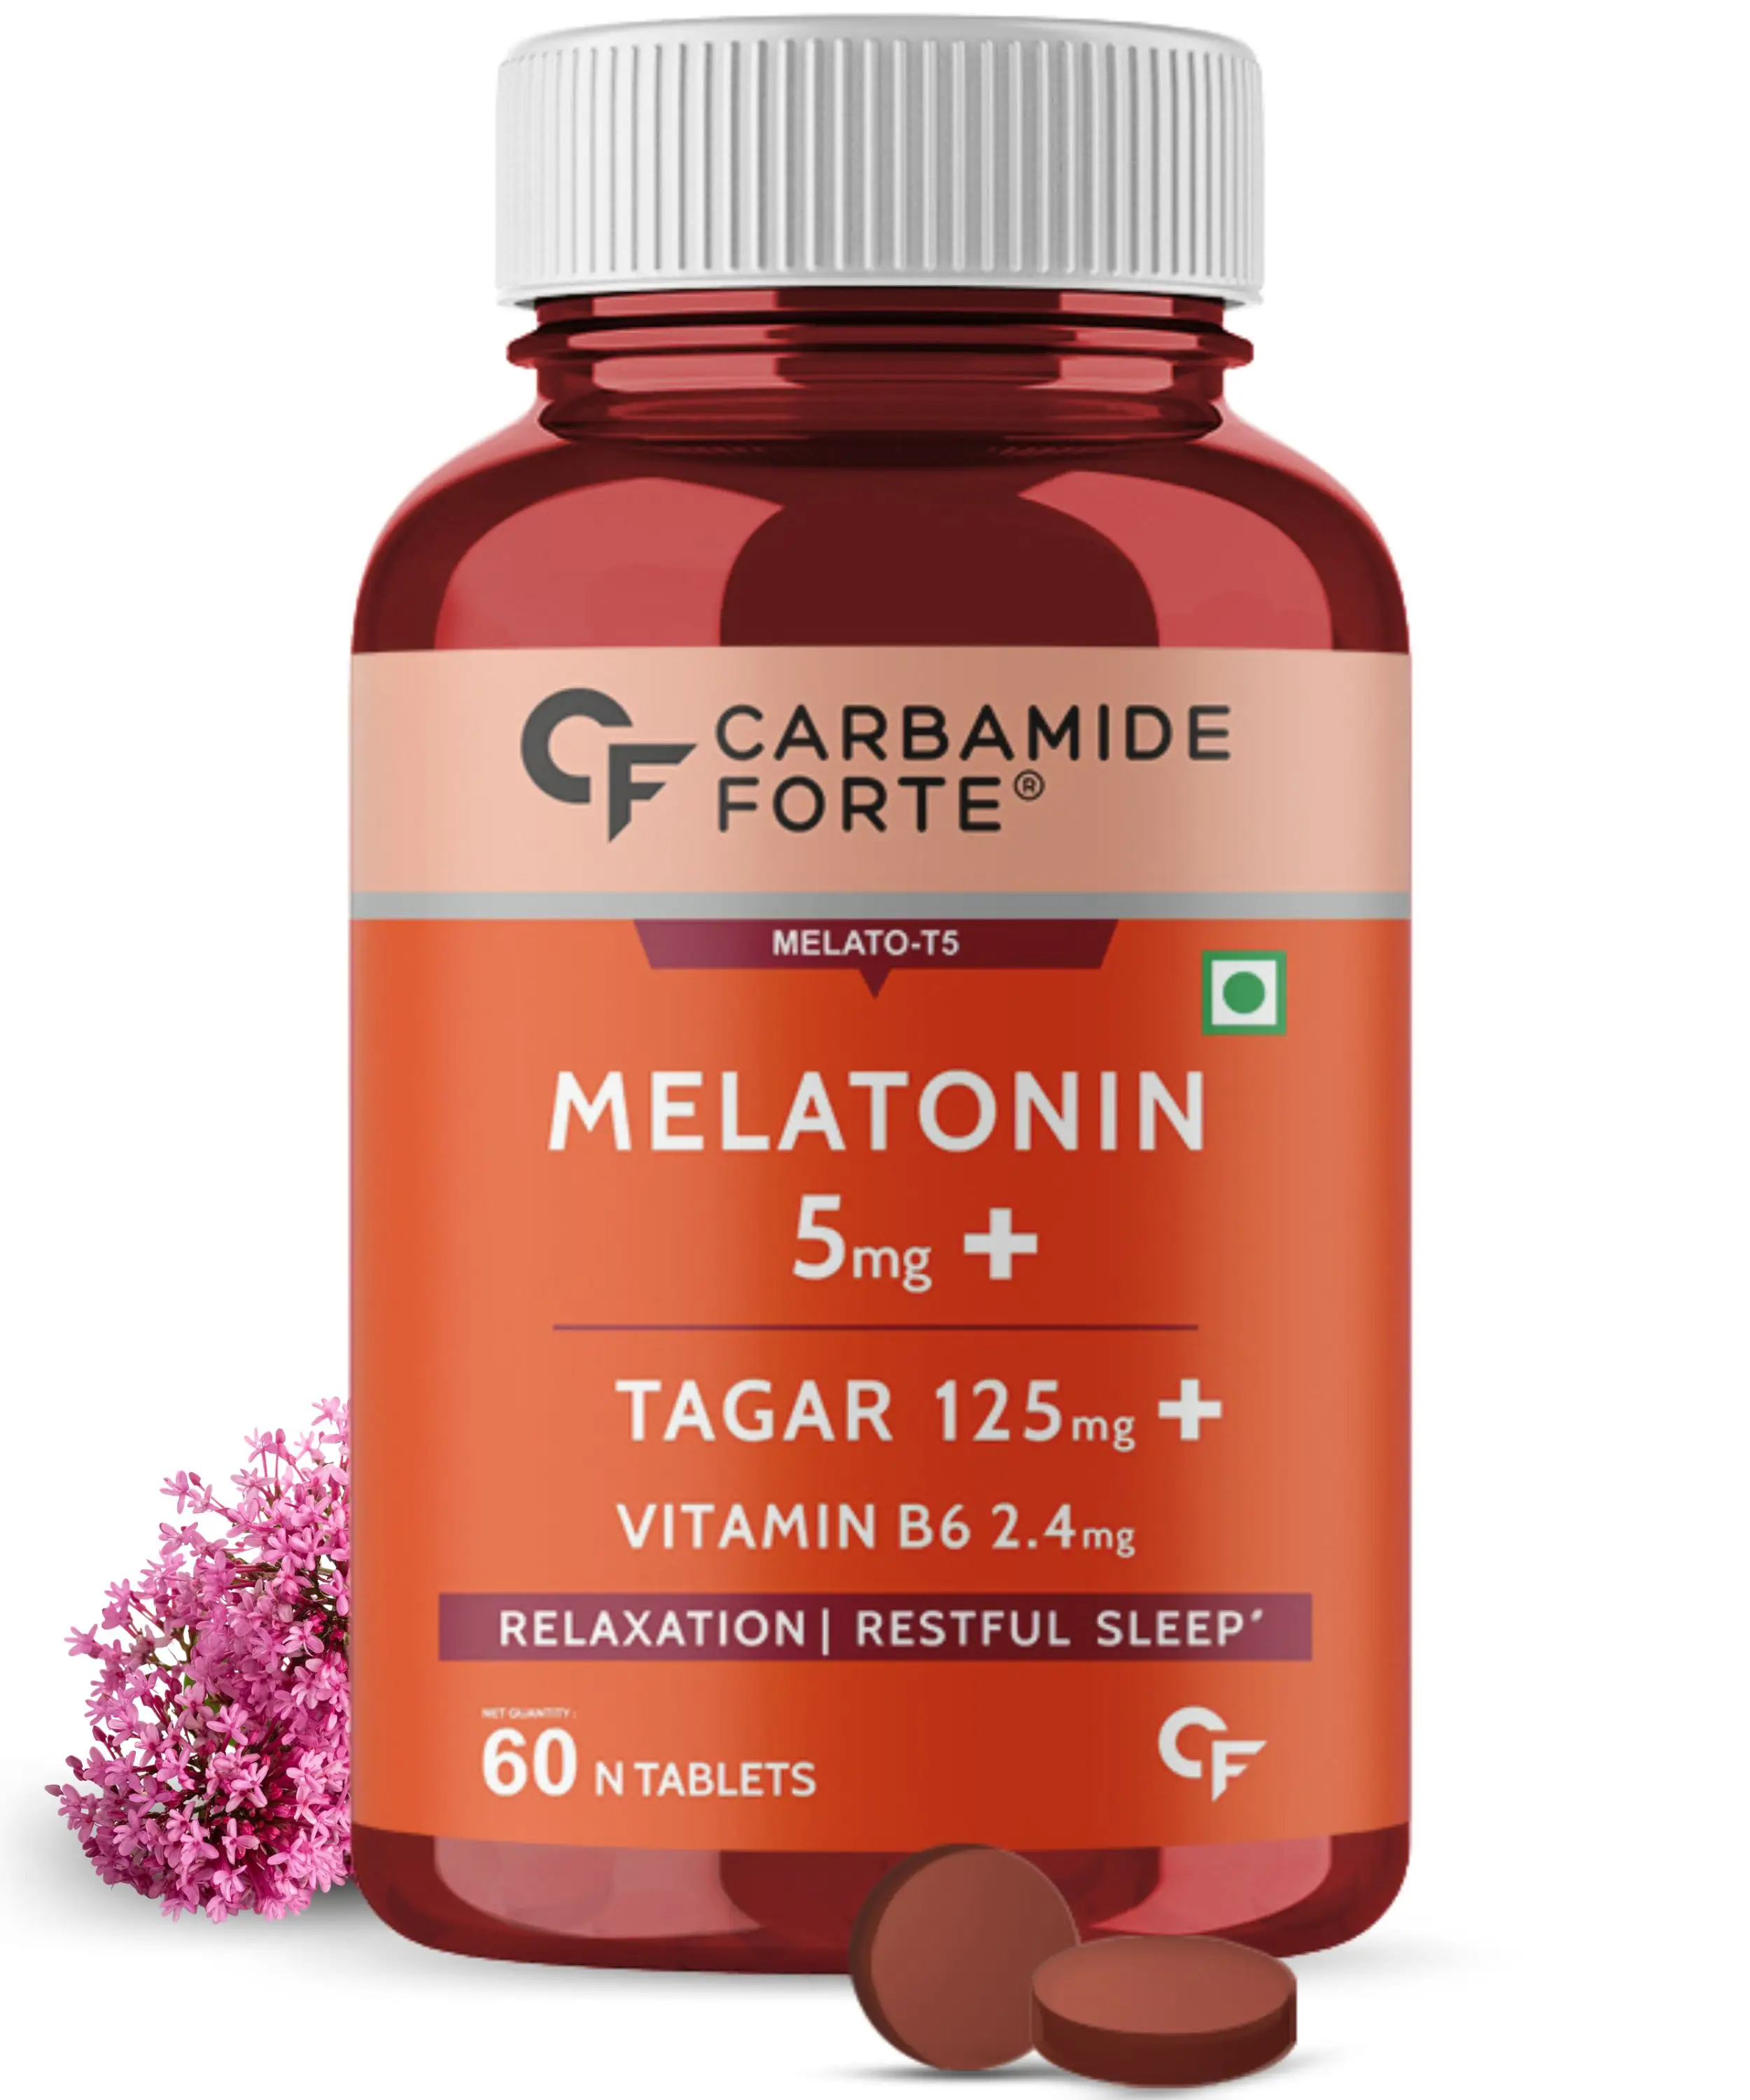 Melatonin 5mg with Tagara Sleep Supplement to Improve Sleep quality, Stress Relief Sleeping Pills Advanced Melatonin Tablets